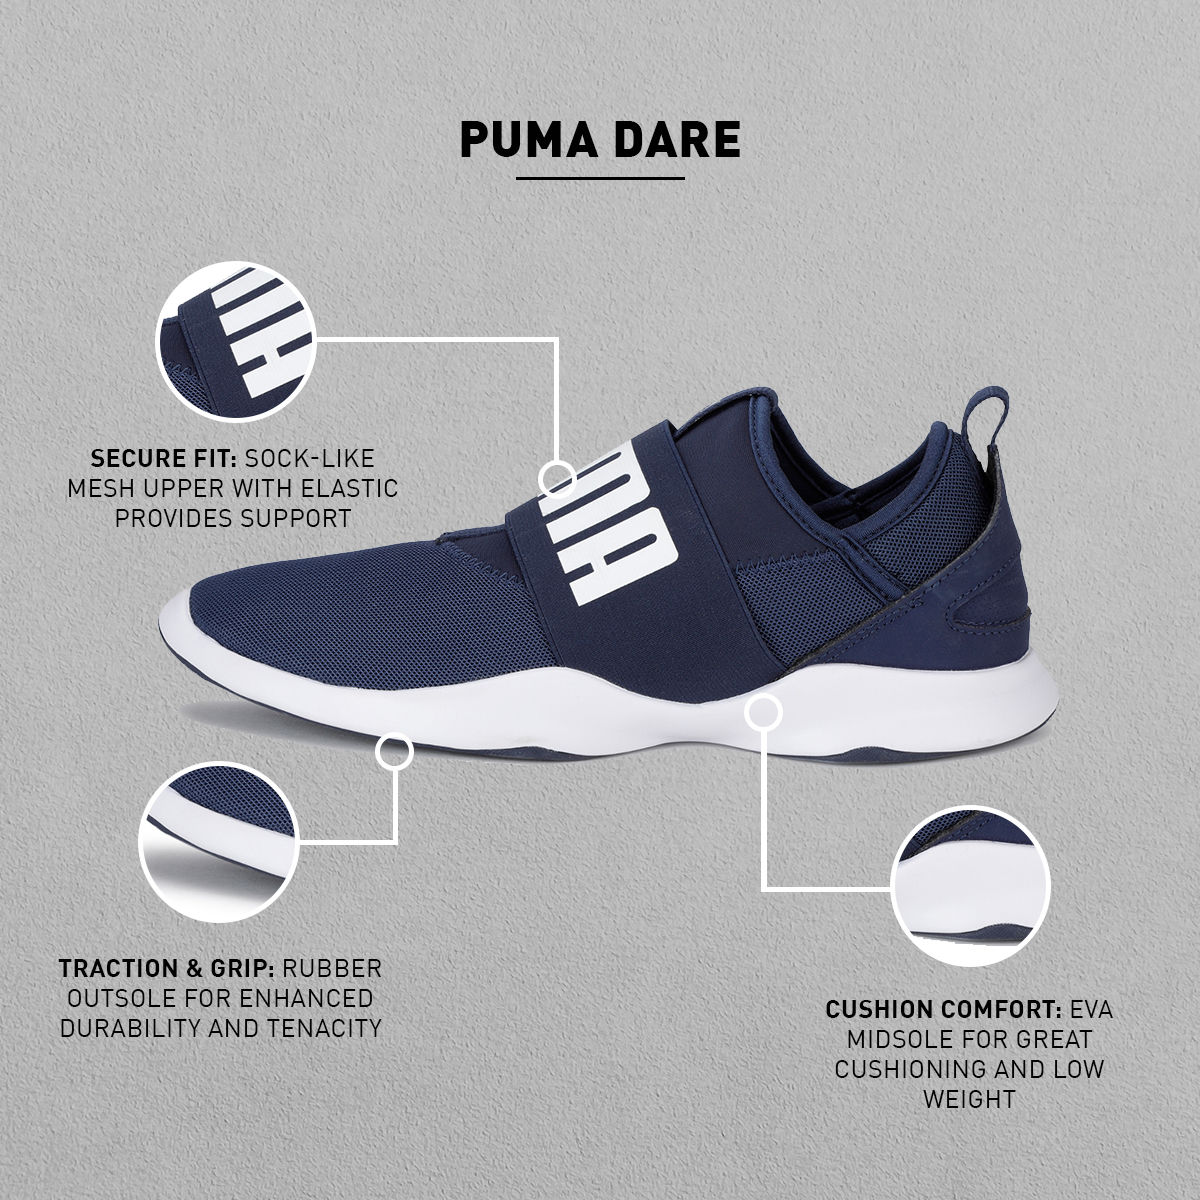 Buy Puma Unisex Adult Dare Shoes (Grey_4 UK) at Amazon.in